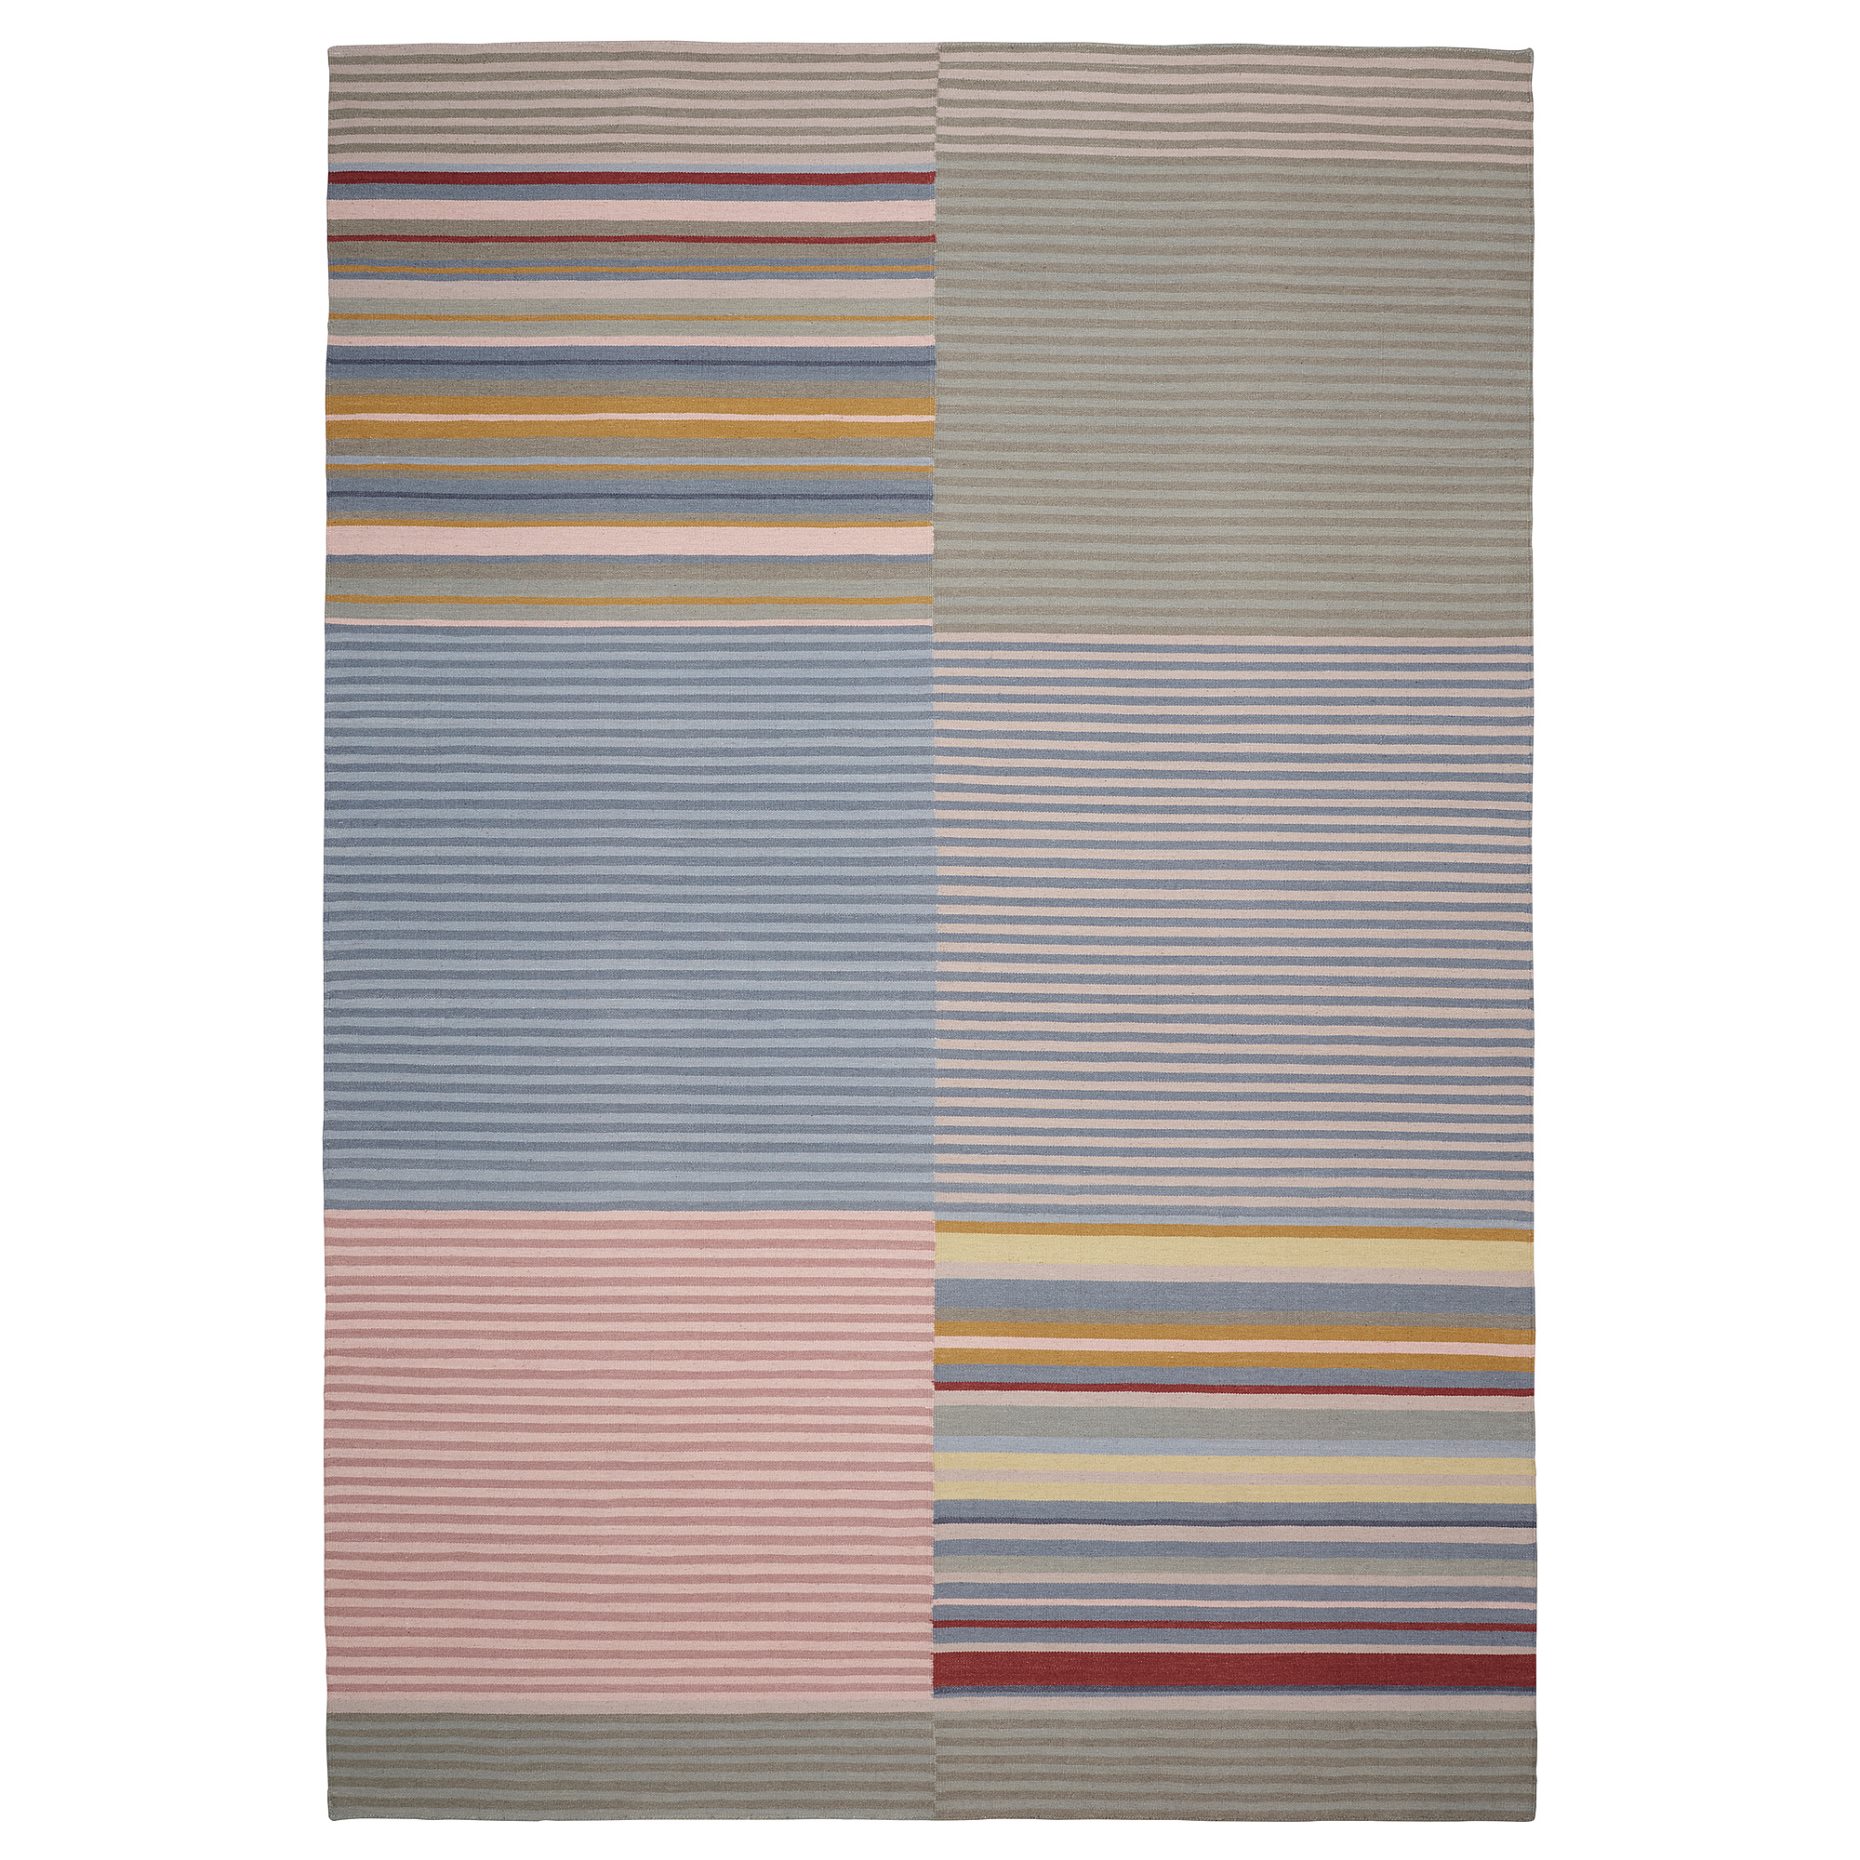 BUDDINGE, xαλί, χαμηλή πλέξη/xειροποίητο/μοτίβο ριγέ, 170x240 cm, 105.141.79